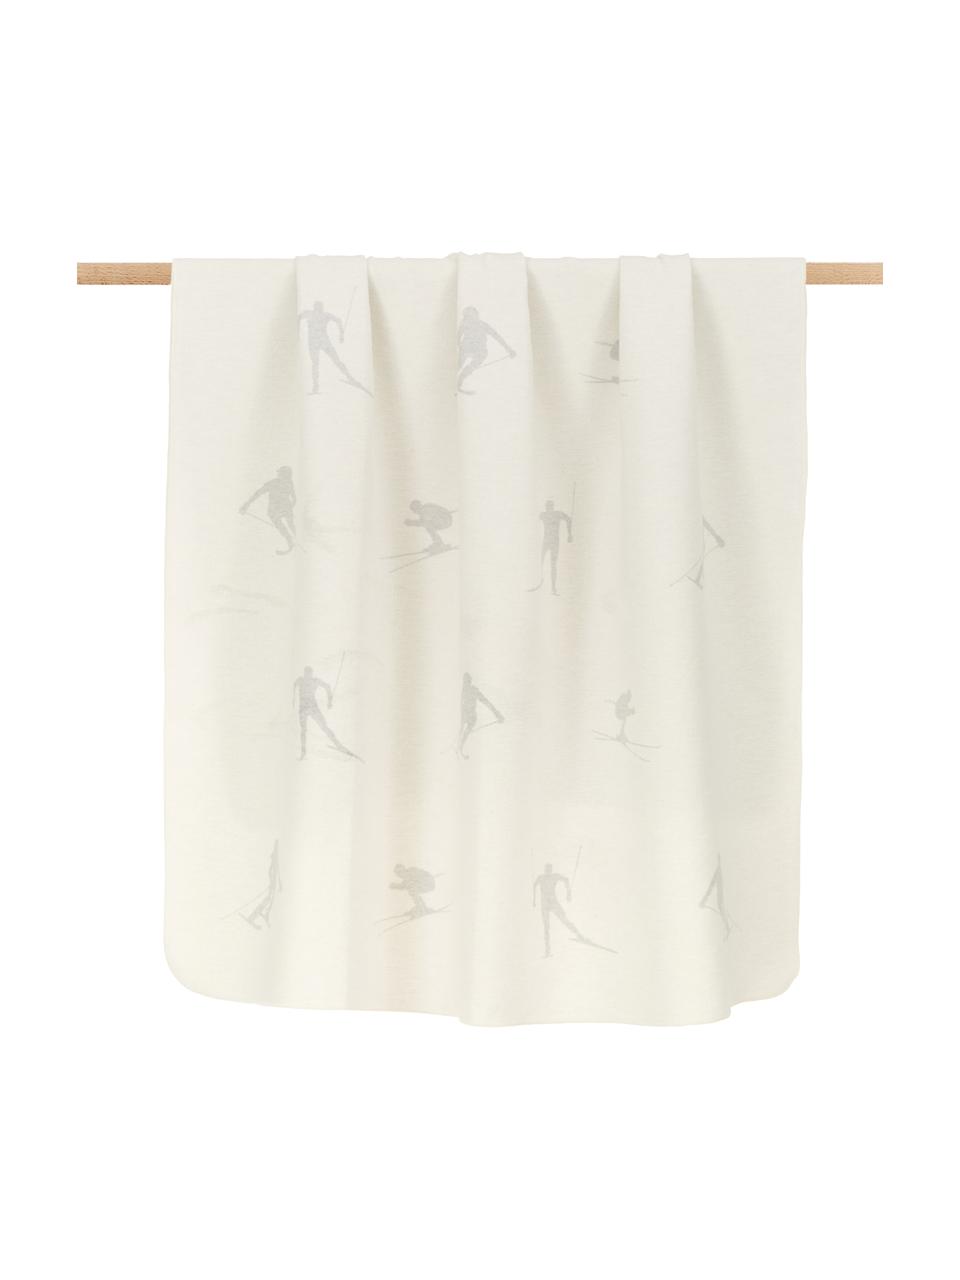 Manta de franela Skiers, 85% algodón, 15% poliacrílico, Blanco, gris, An 140 x L 200 cm